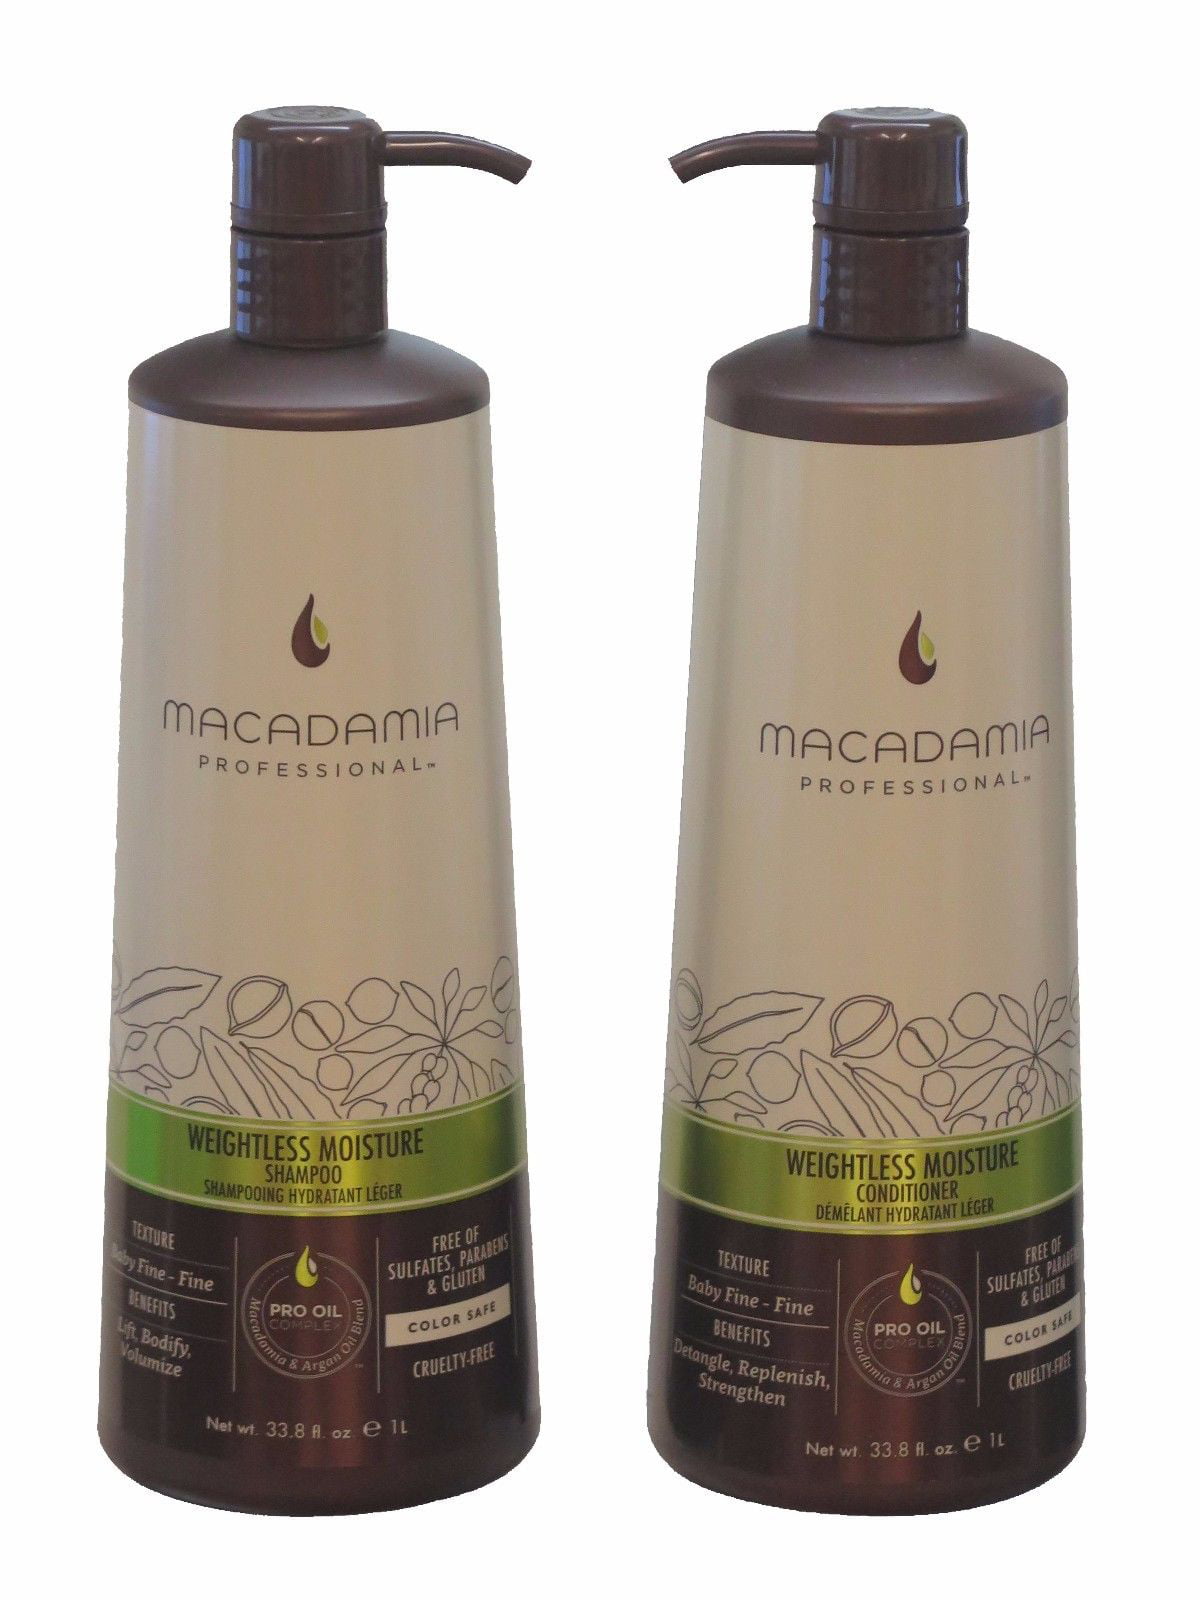 Macadamia Professional Weightless Moisture Shampoo & Conditioner 1 Litre Walmart.com